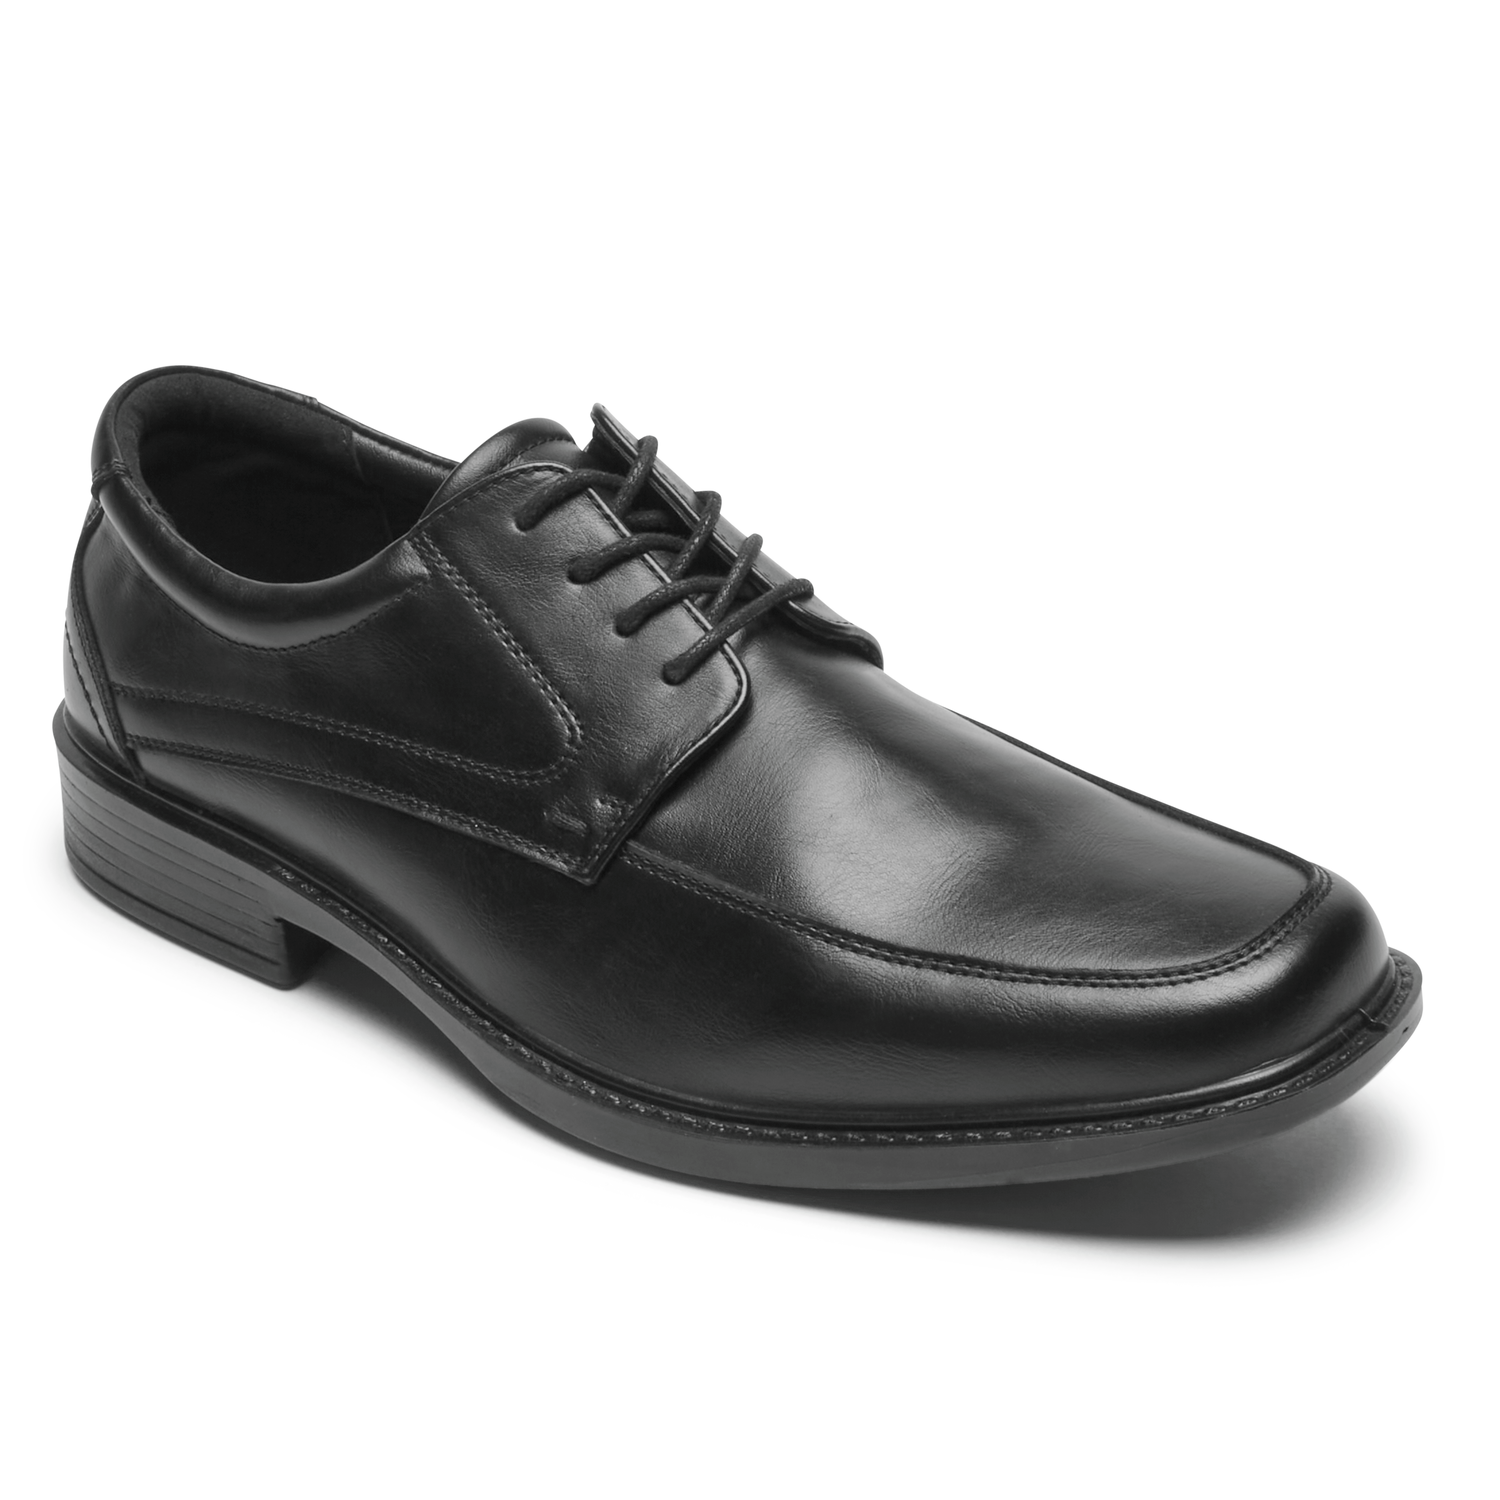 Rockport Men's Everett Oxford Shoe $34.99 + Free Shipping